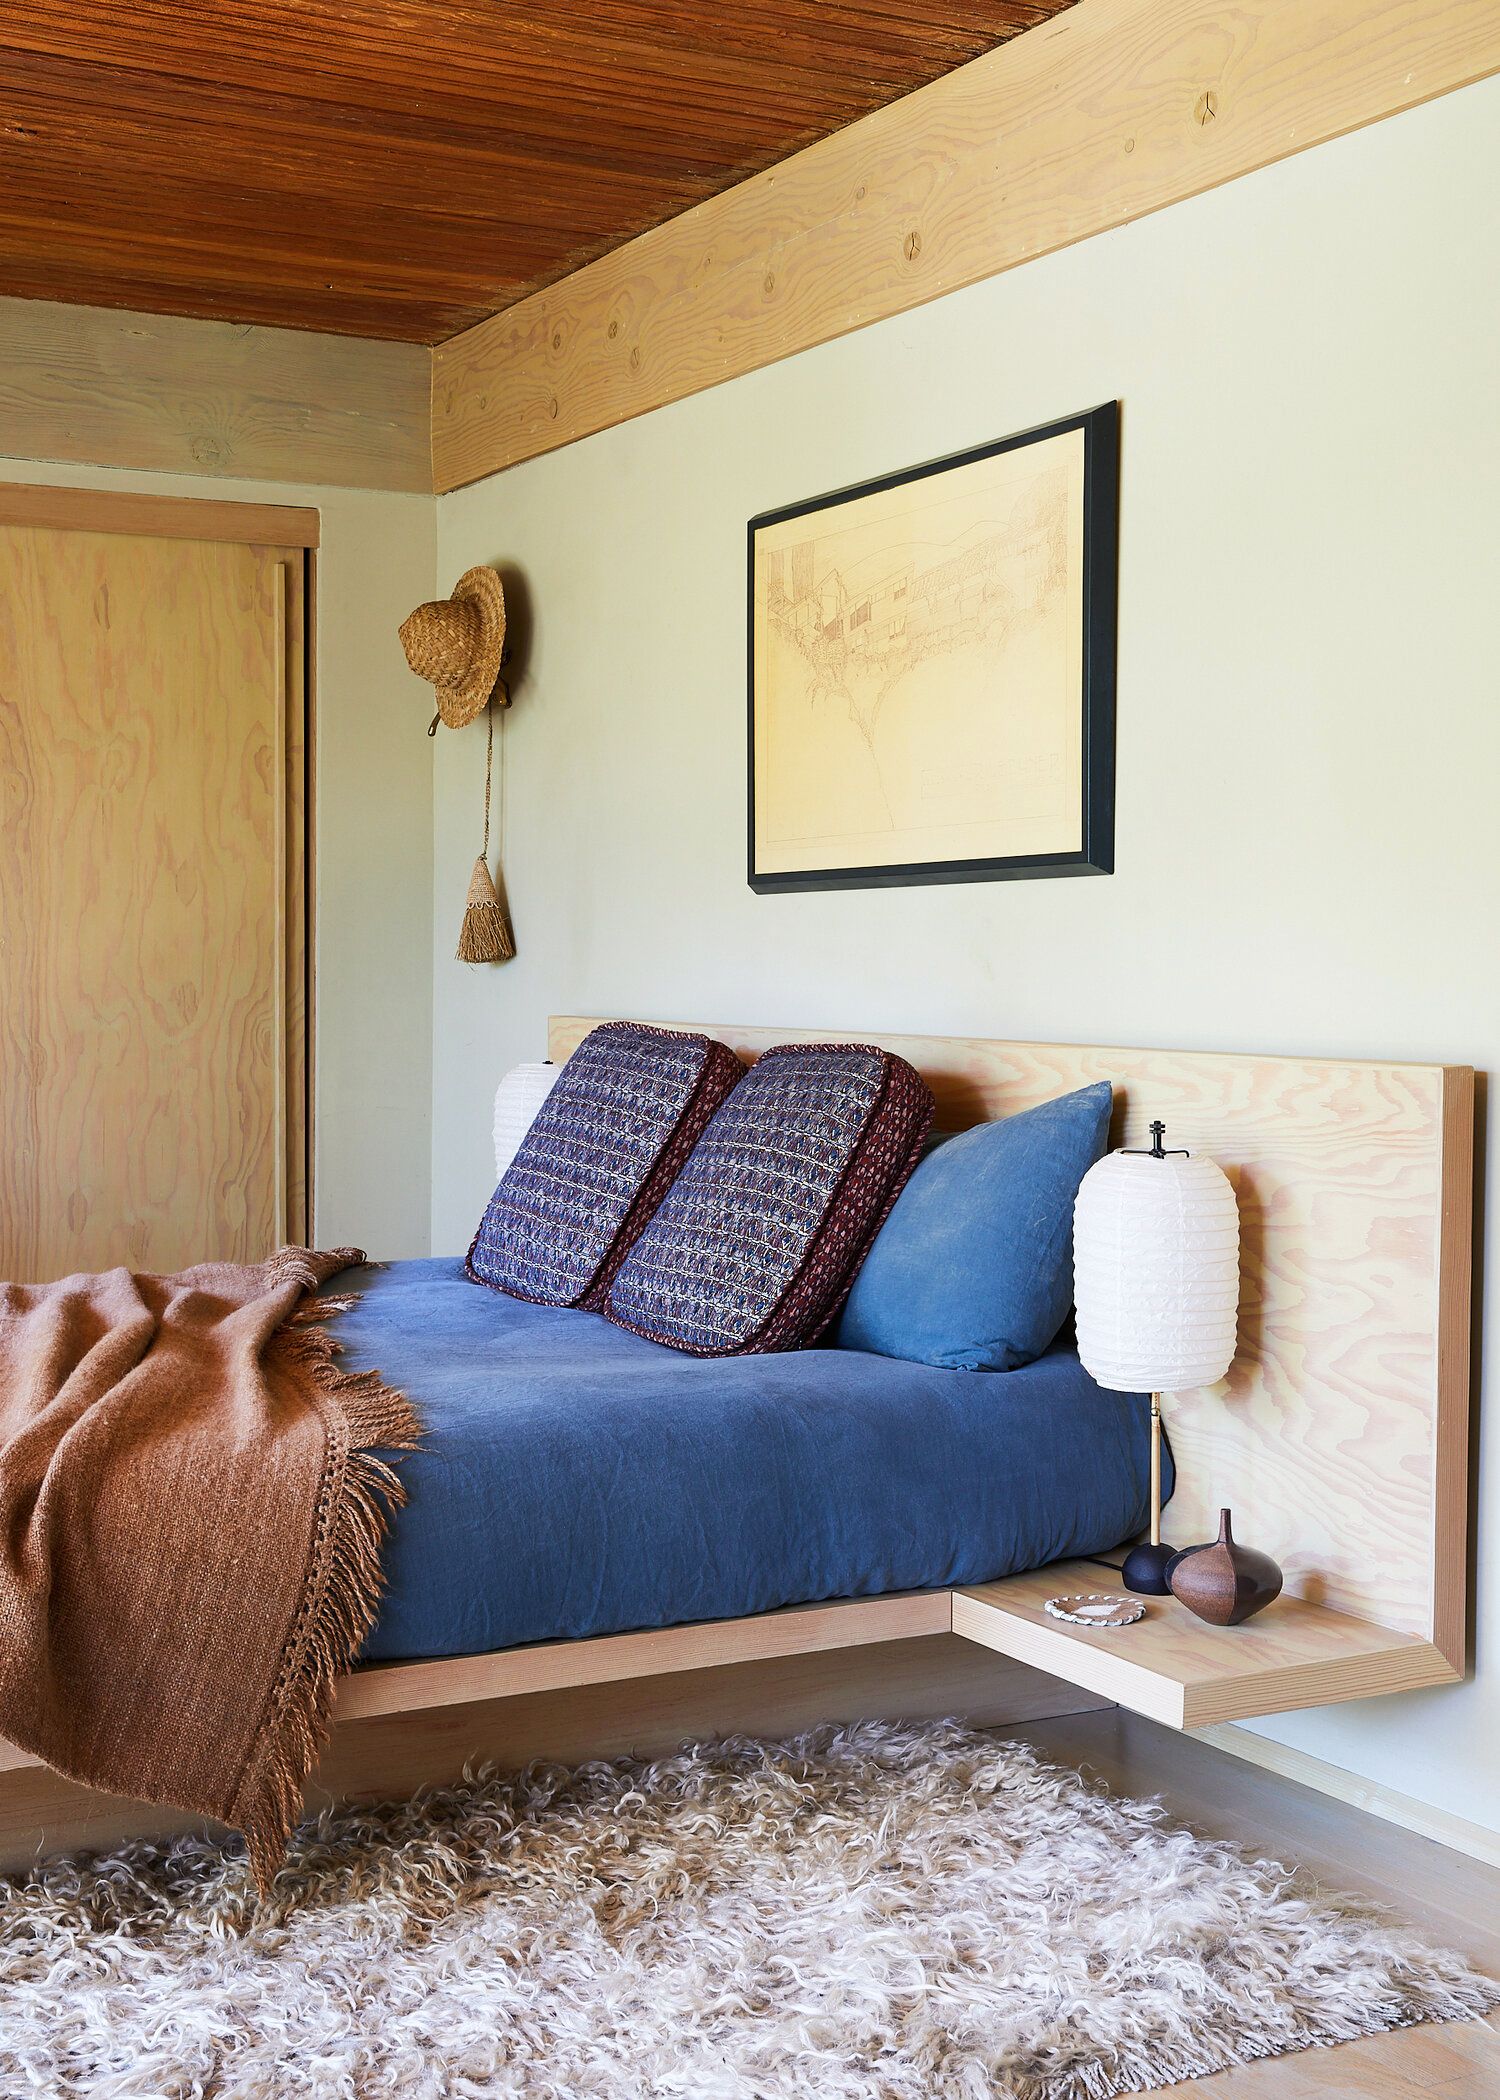 Interior Design Minimalist Couch Pillows Living Room Bedding Boho Earth Tones Square Throw Pillow Bohemian Decor Neutrals